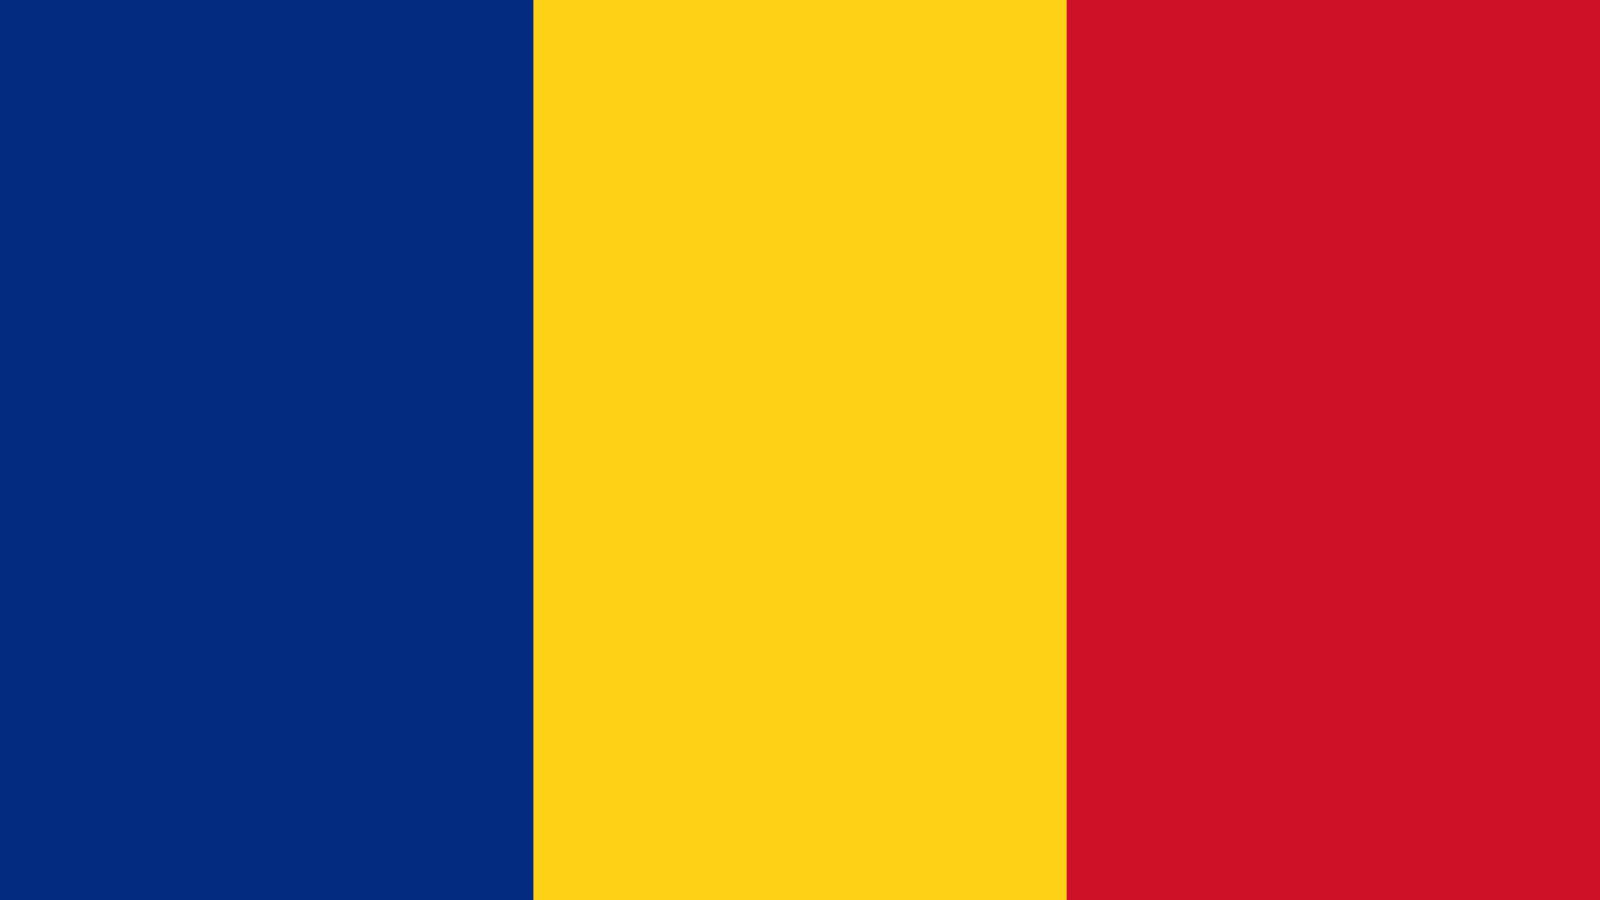 Romanian presidentti covid-19-karanteenissa